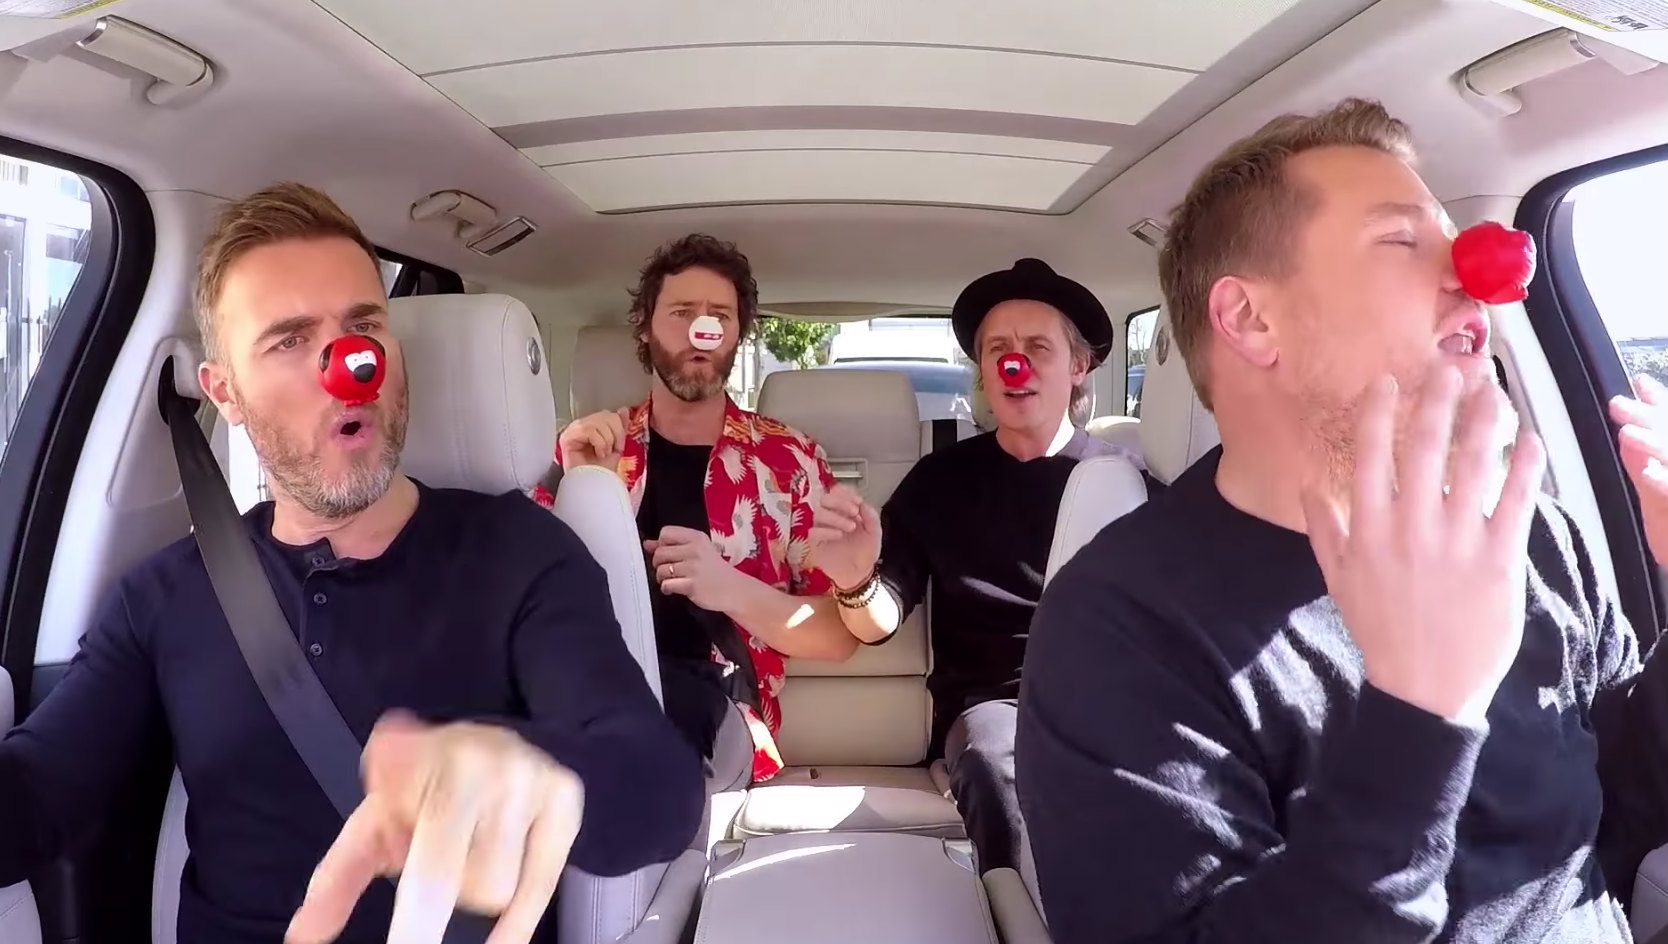 WATCH: Take That joins James Corden on ‘Carpool Karaoke’